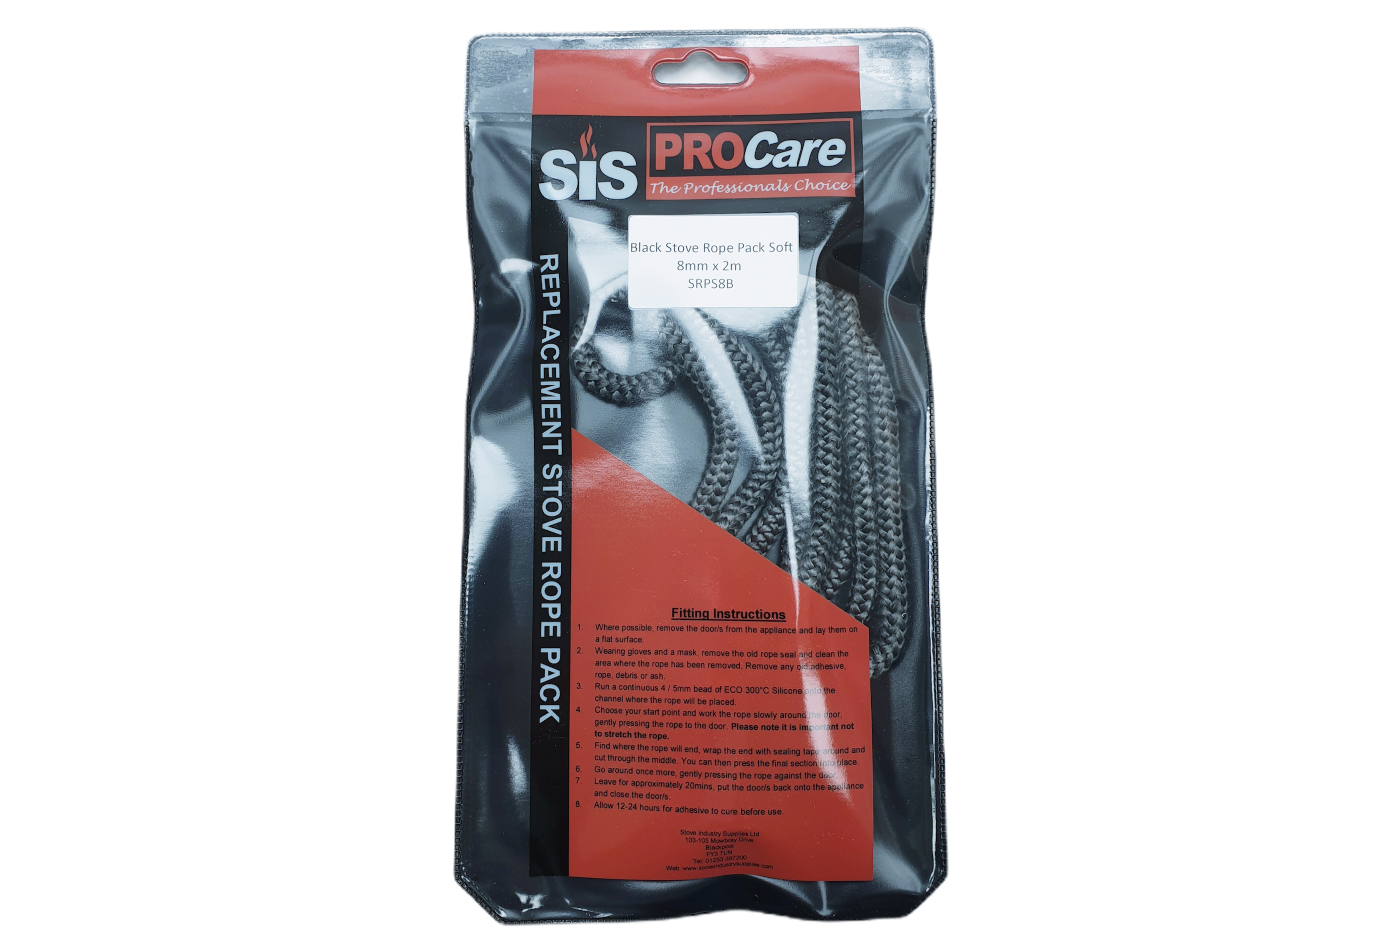 SiS Procare Black 8 milimetre x 2 metre Soft Stove Rope Pack - product code SRPS8B